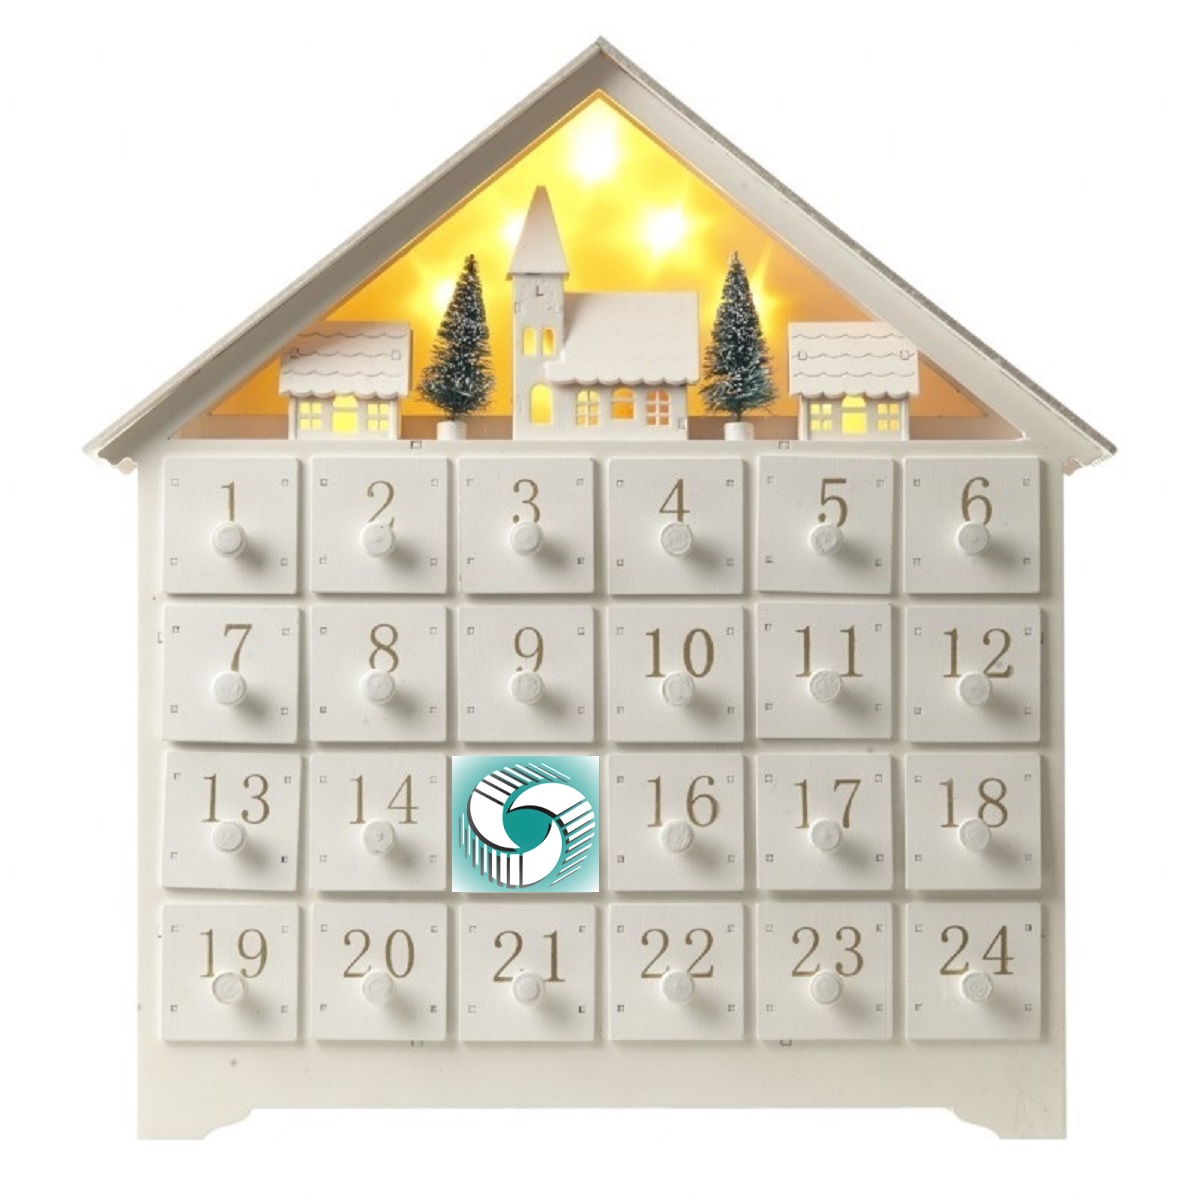 Day 15 – Frontier’s Advent Calendar